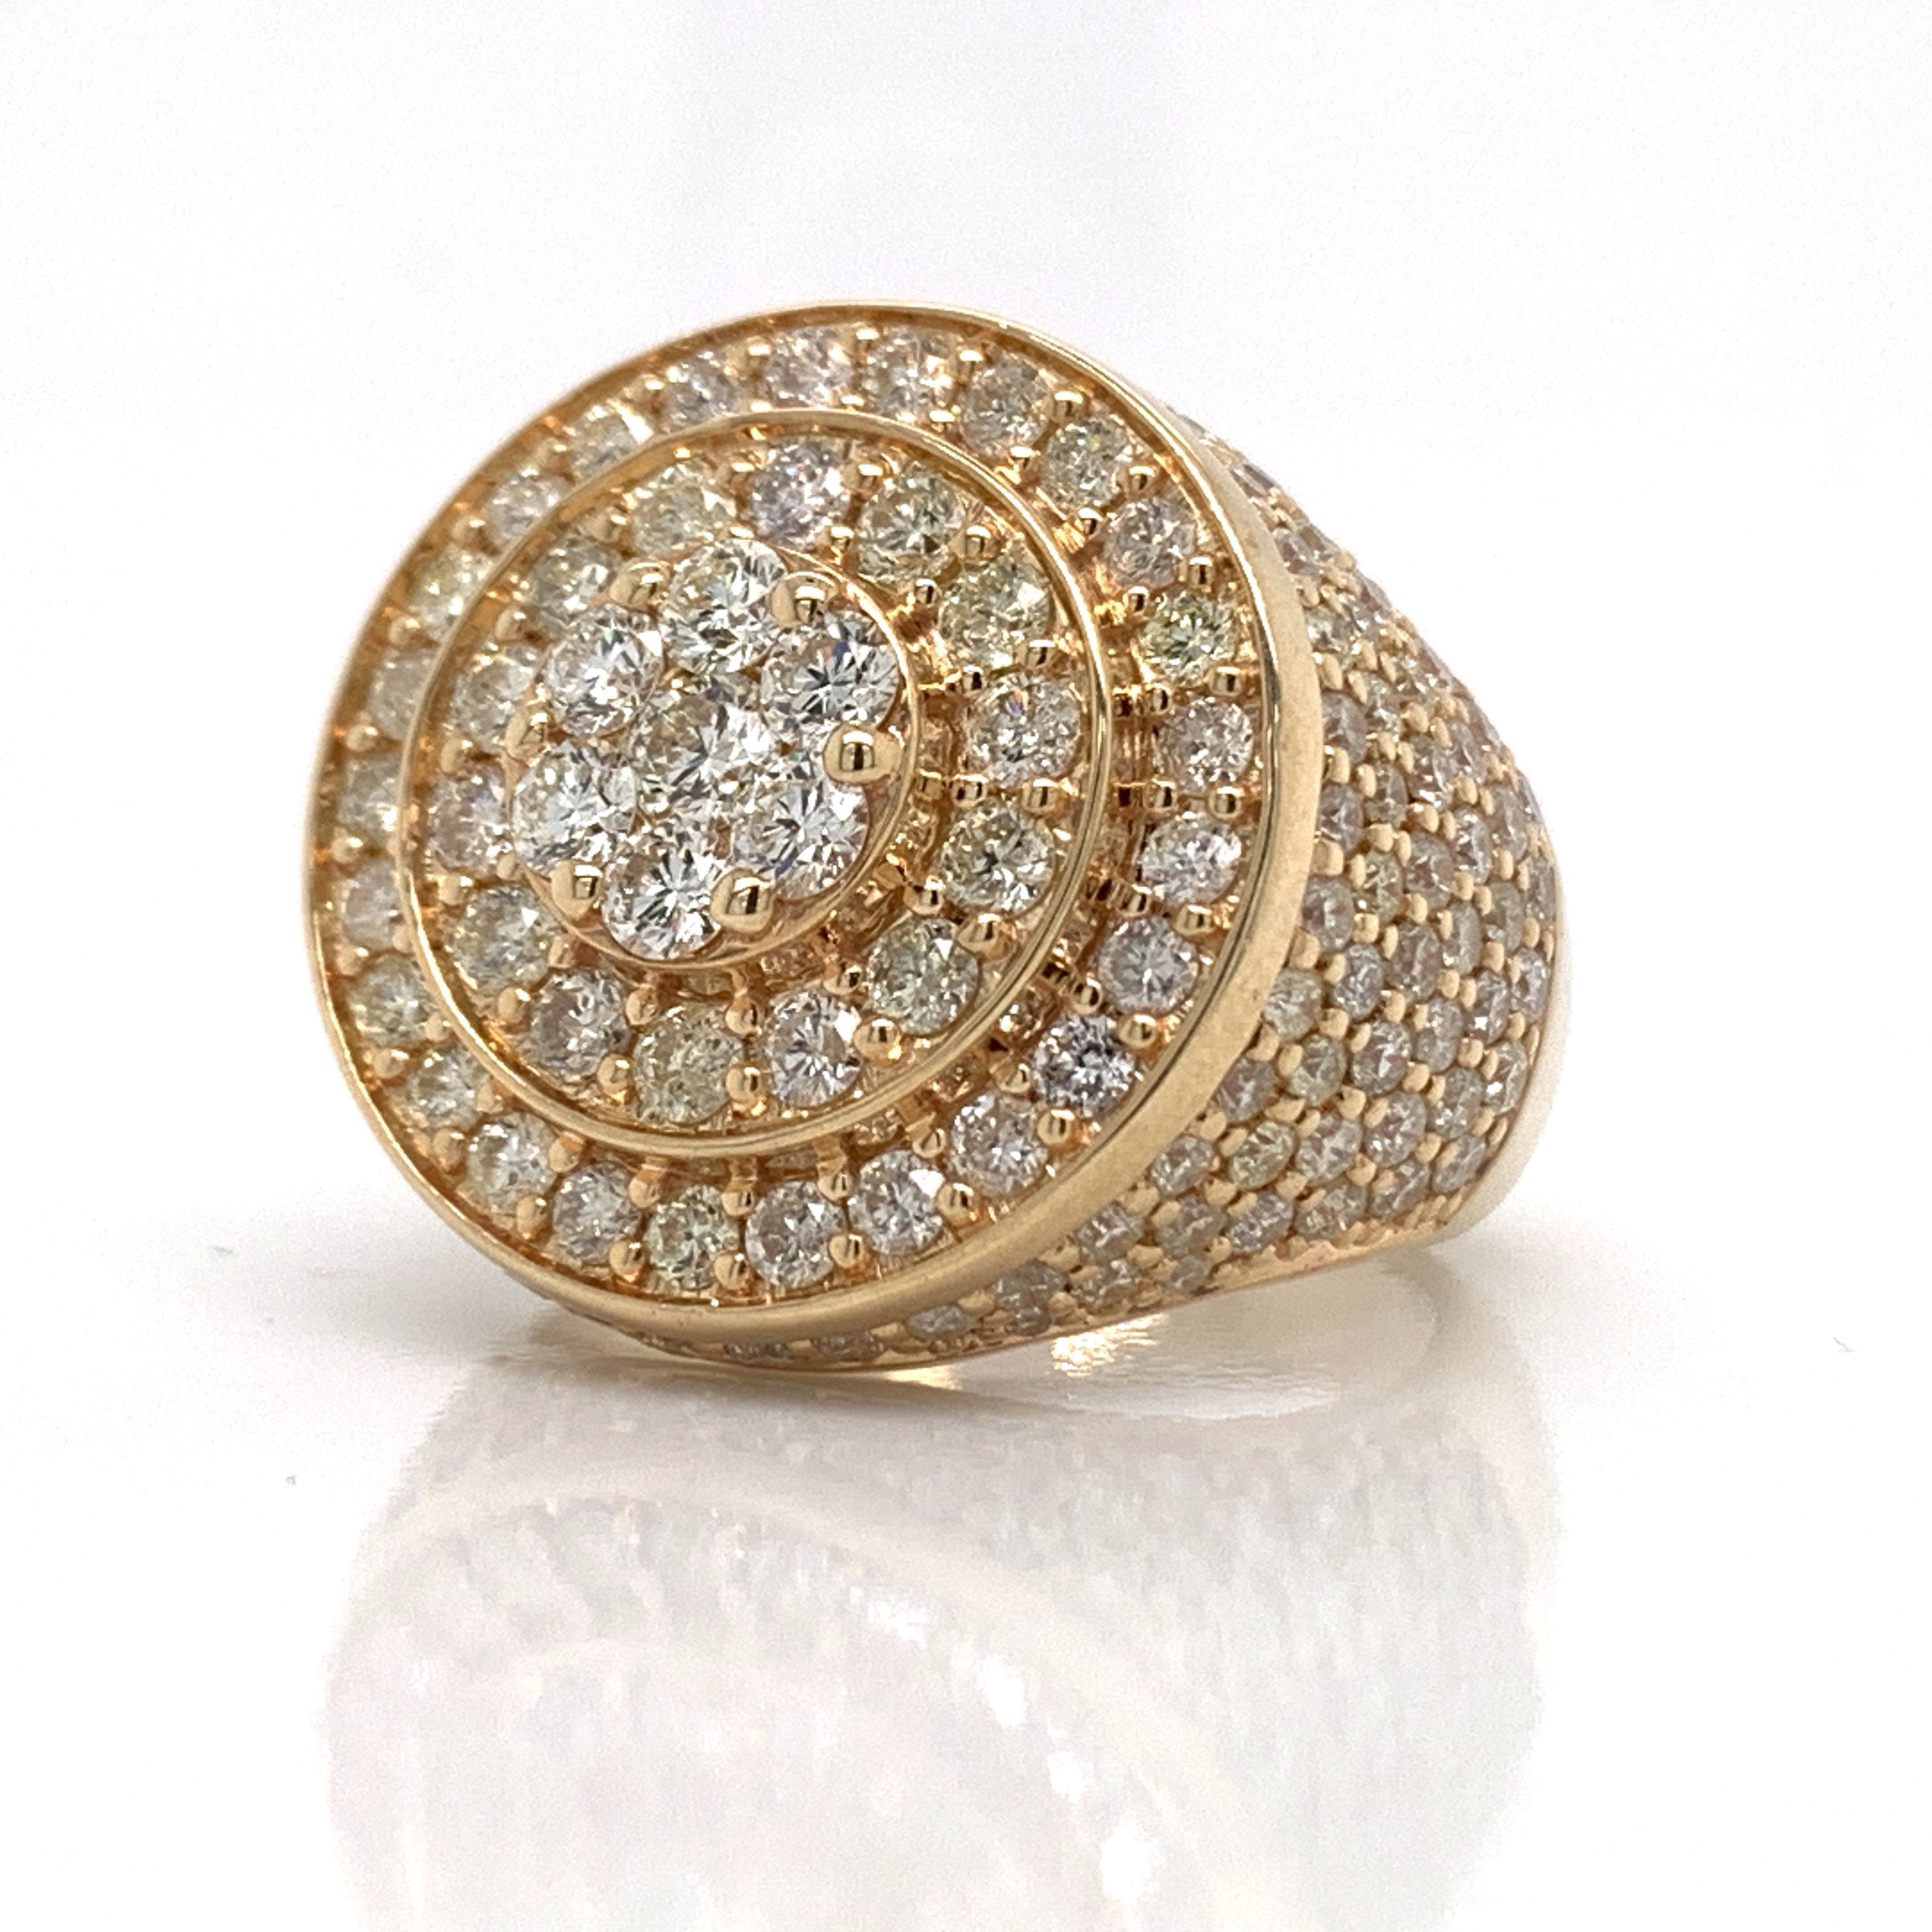 4.00 CT. Diamond Ring in 14K Gold - White Carat Diamonds 